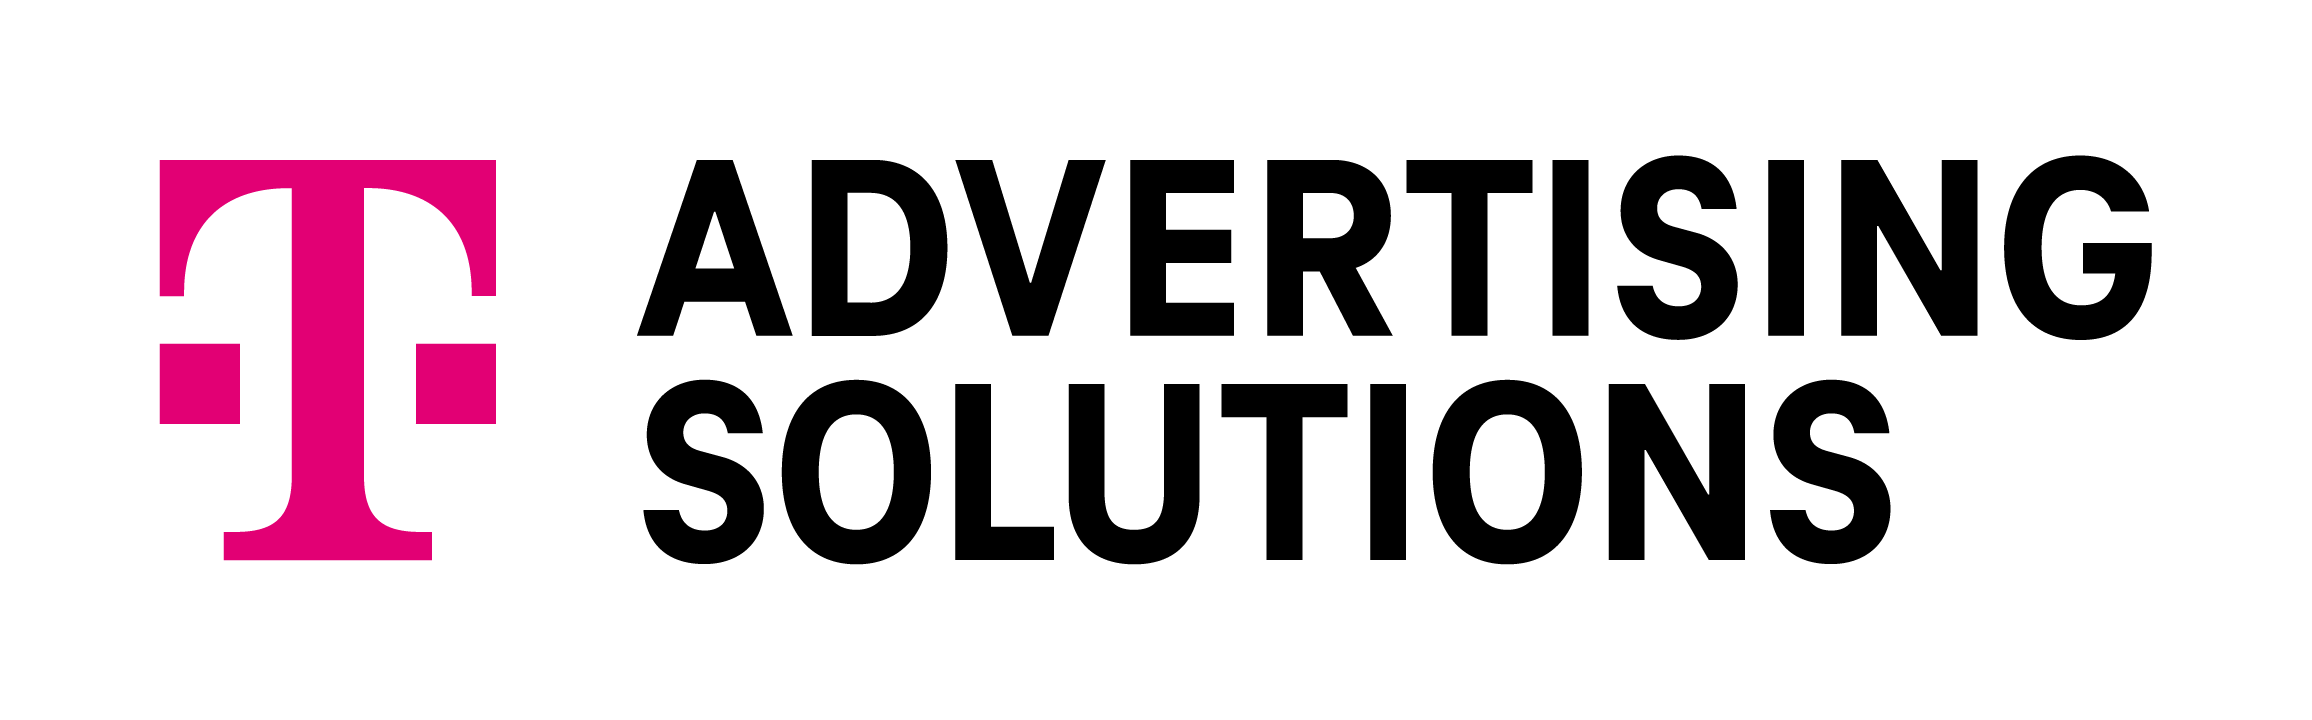 T-Mobile Advertising Solutions logo